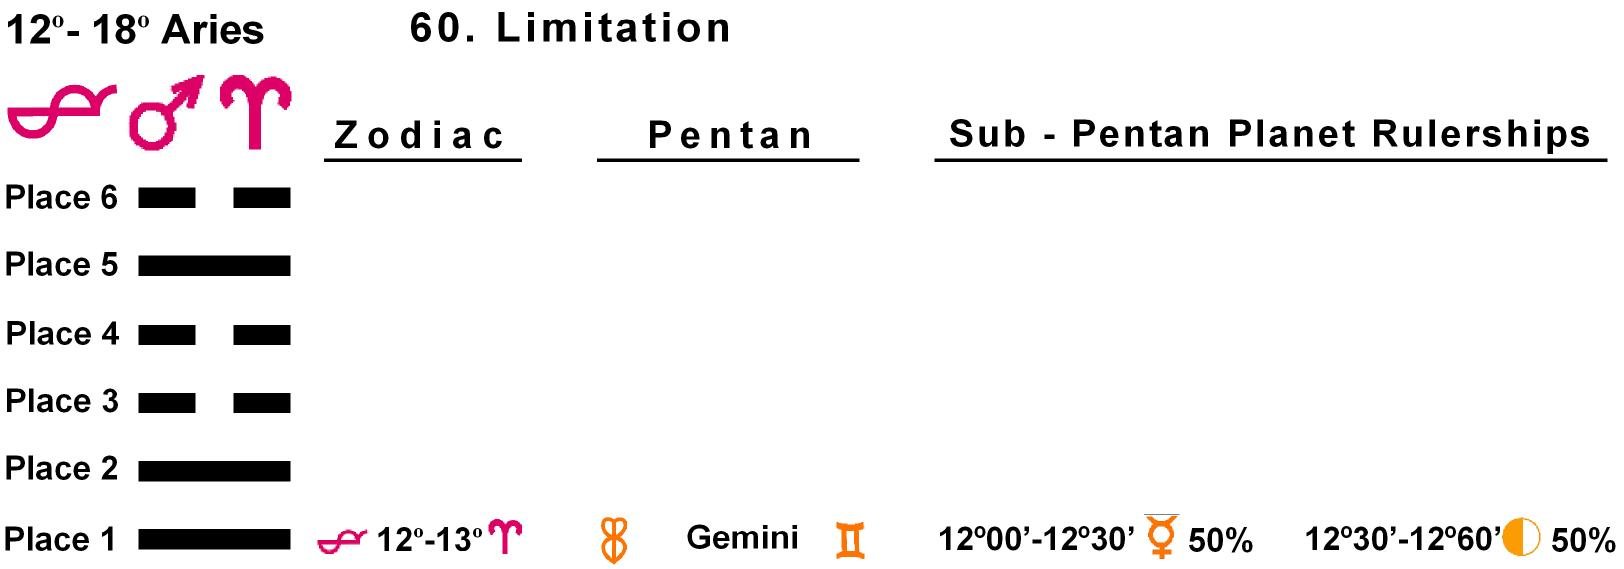 Pent-lines-01AR 12-13 Hx-60 Limitation